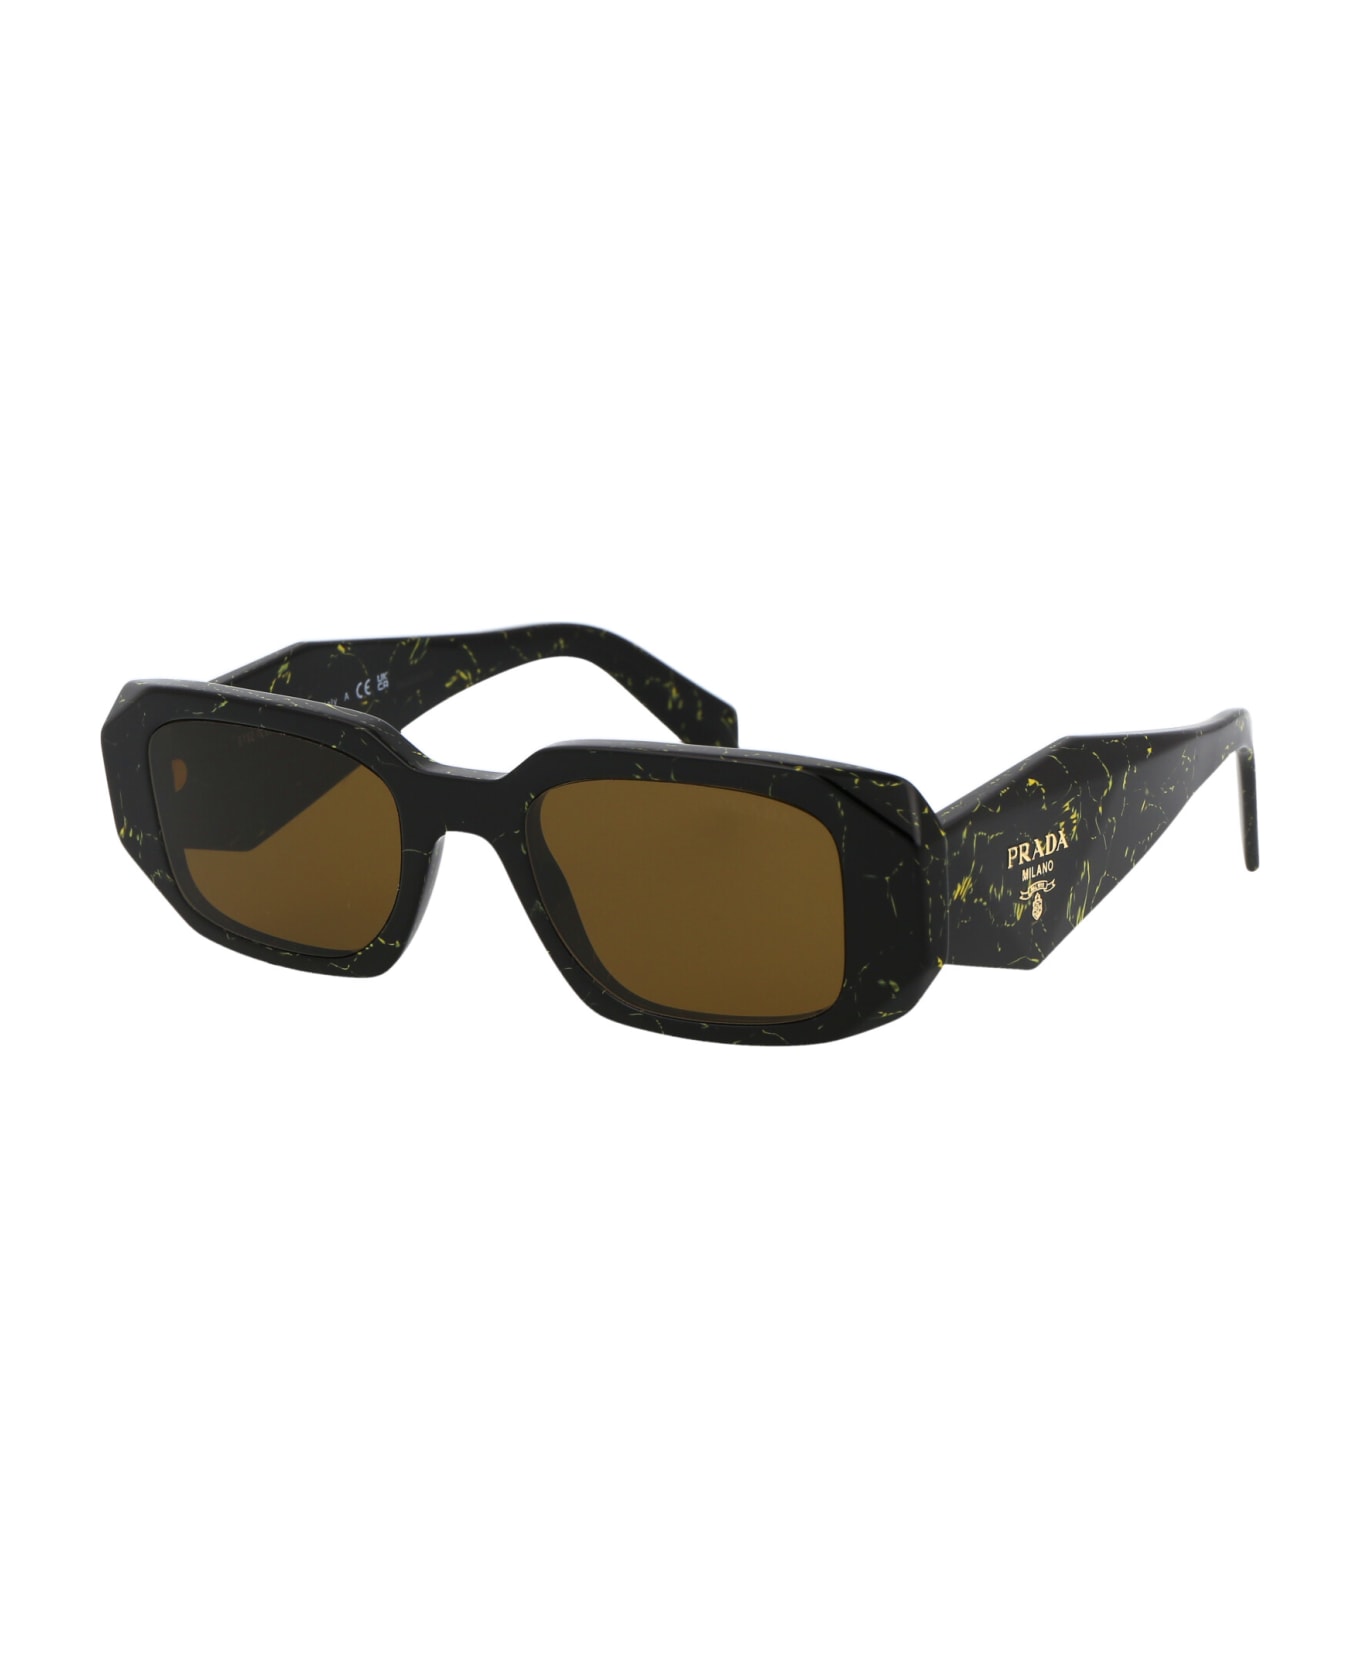 Prada Eyewear 0pr 17ws Sunglasses - 19Rayban hexagonal sunglasses in silver